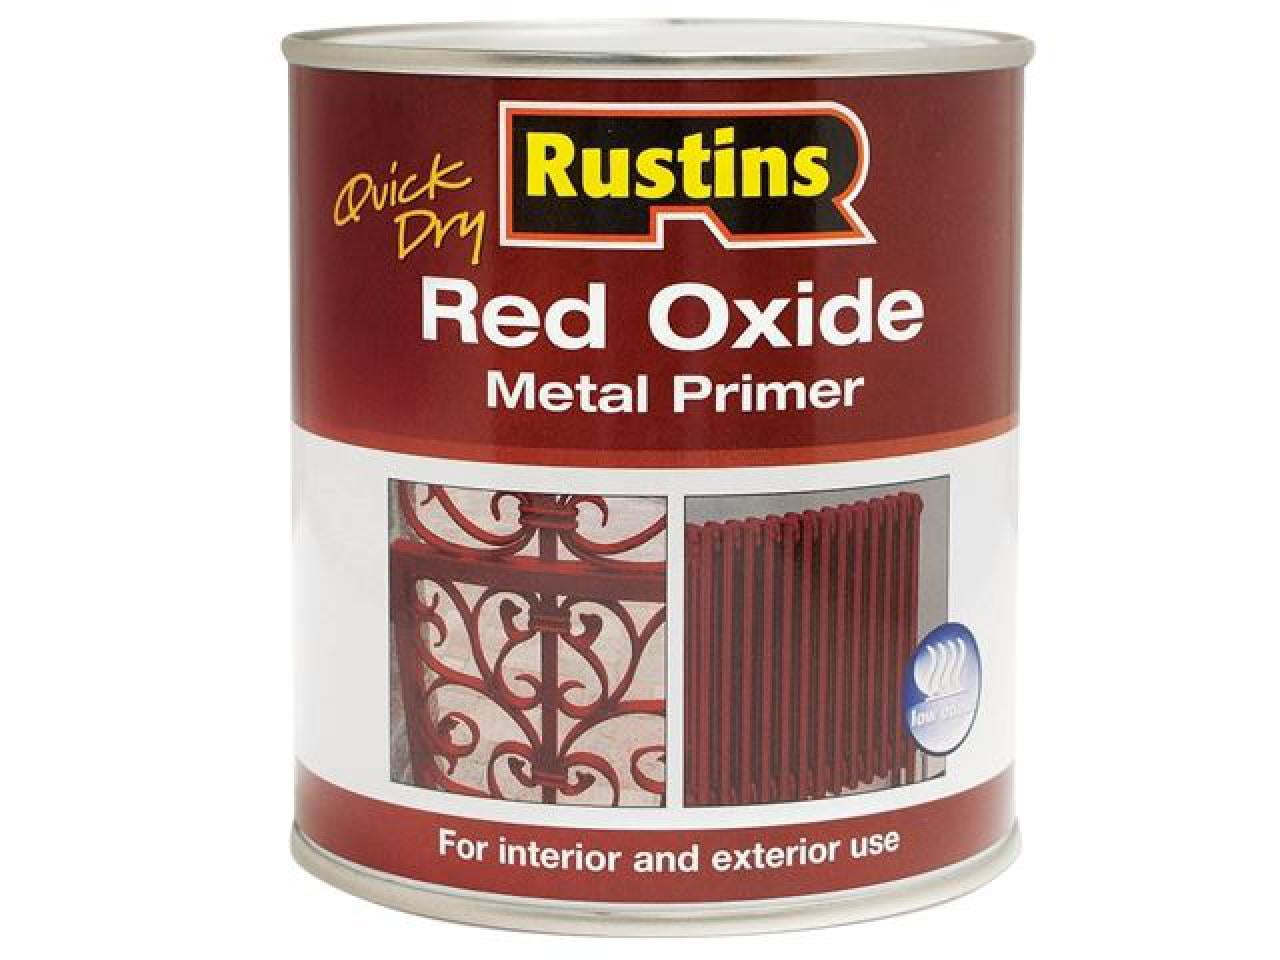 Heavy Red Oxide Primer (hematite oxide) / RO-350 / 12-12 oz cans per case